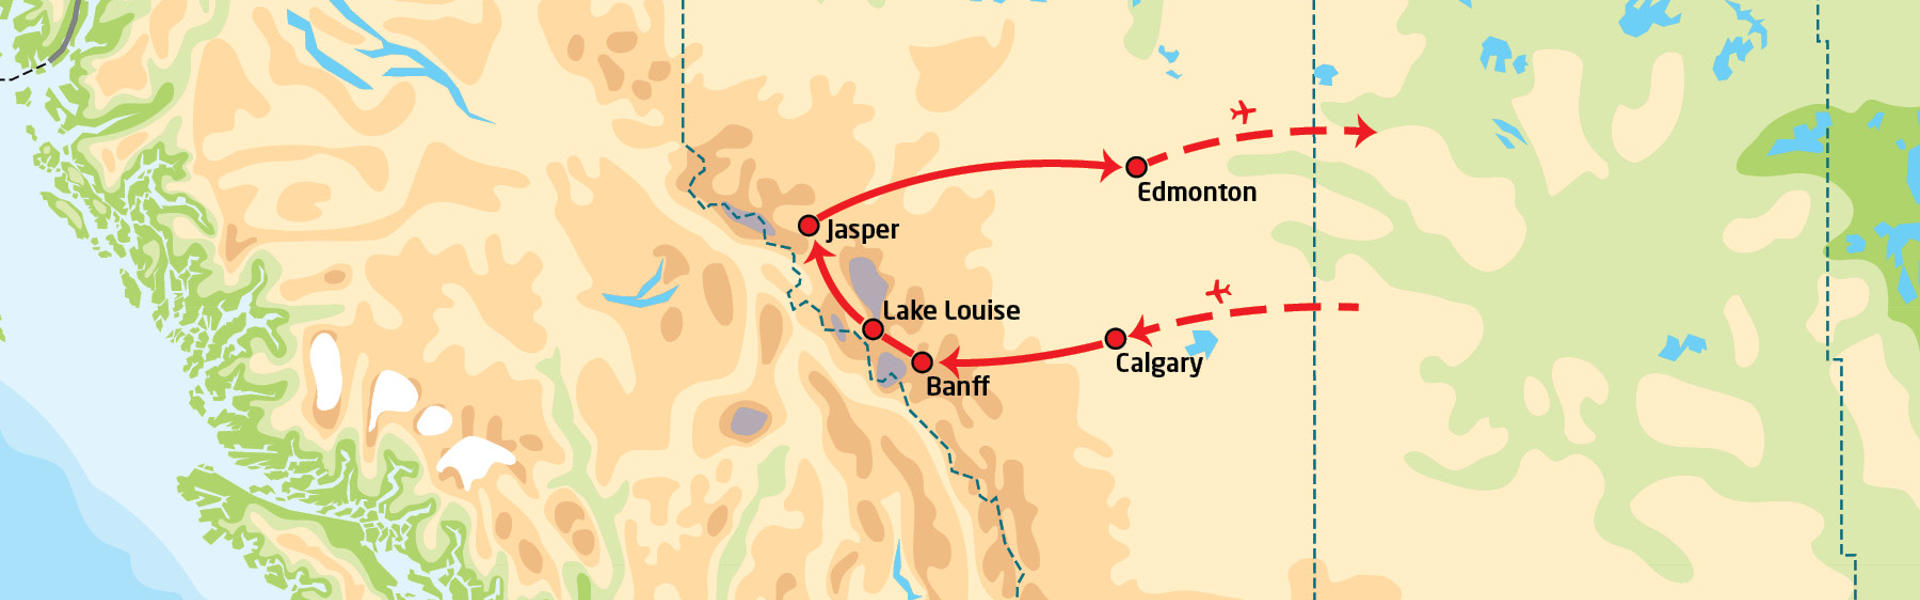 Skiferie i Banff og Jasper - Canada | Reiserute